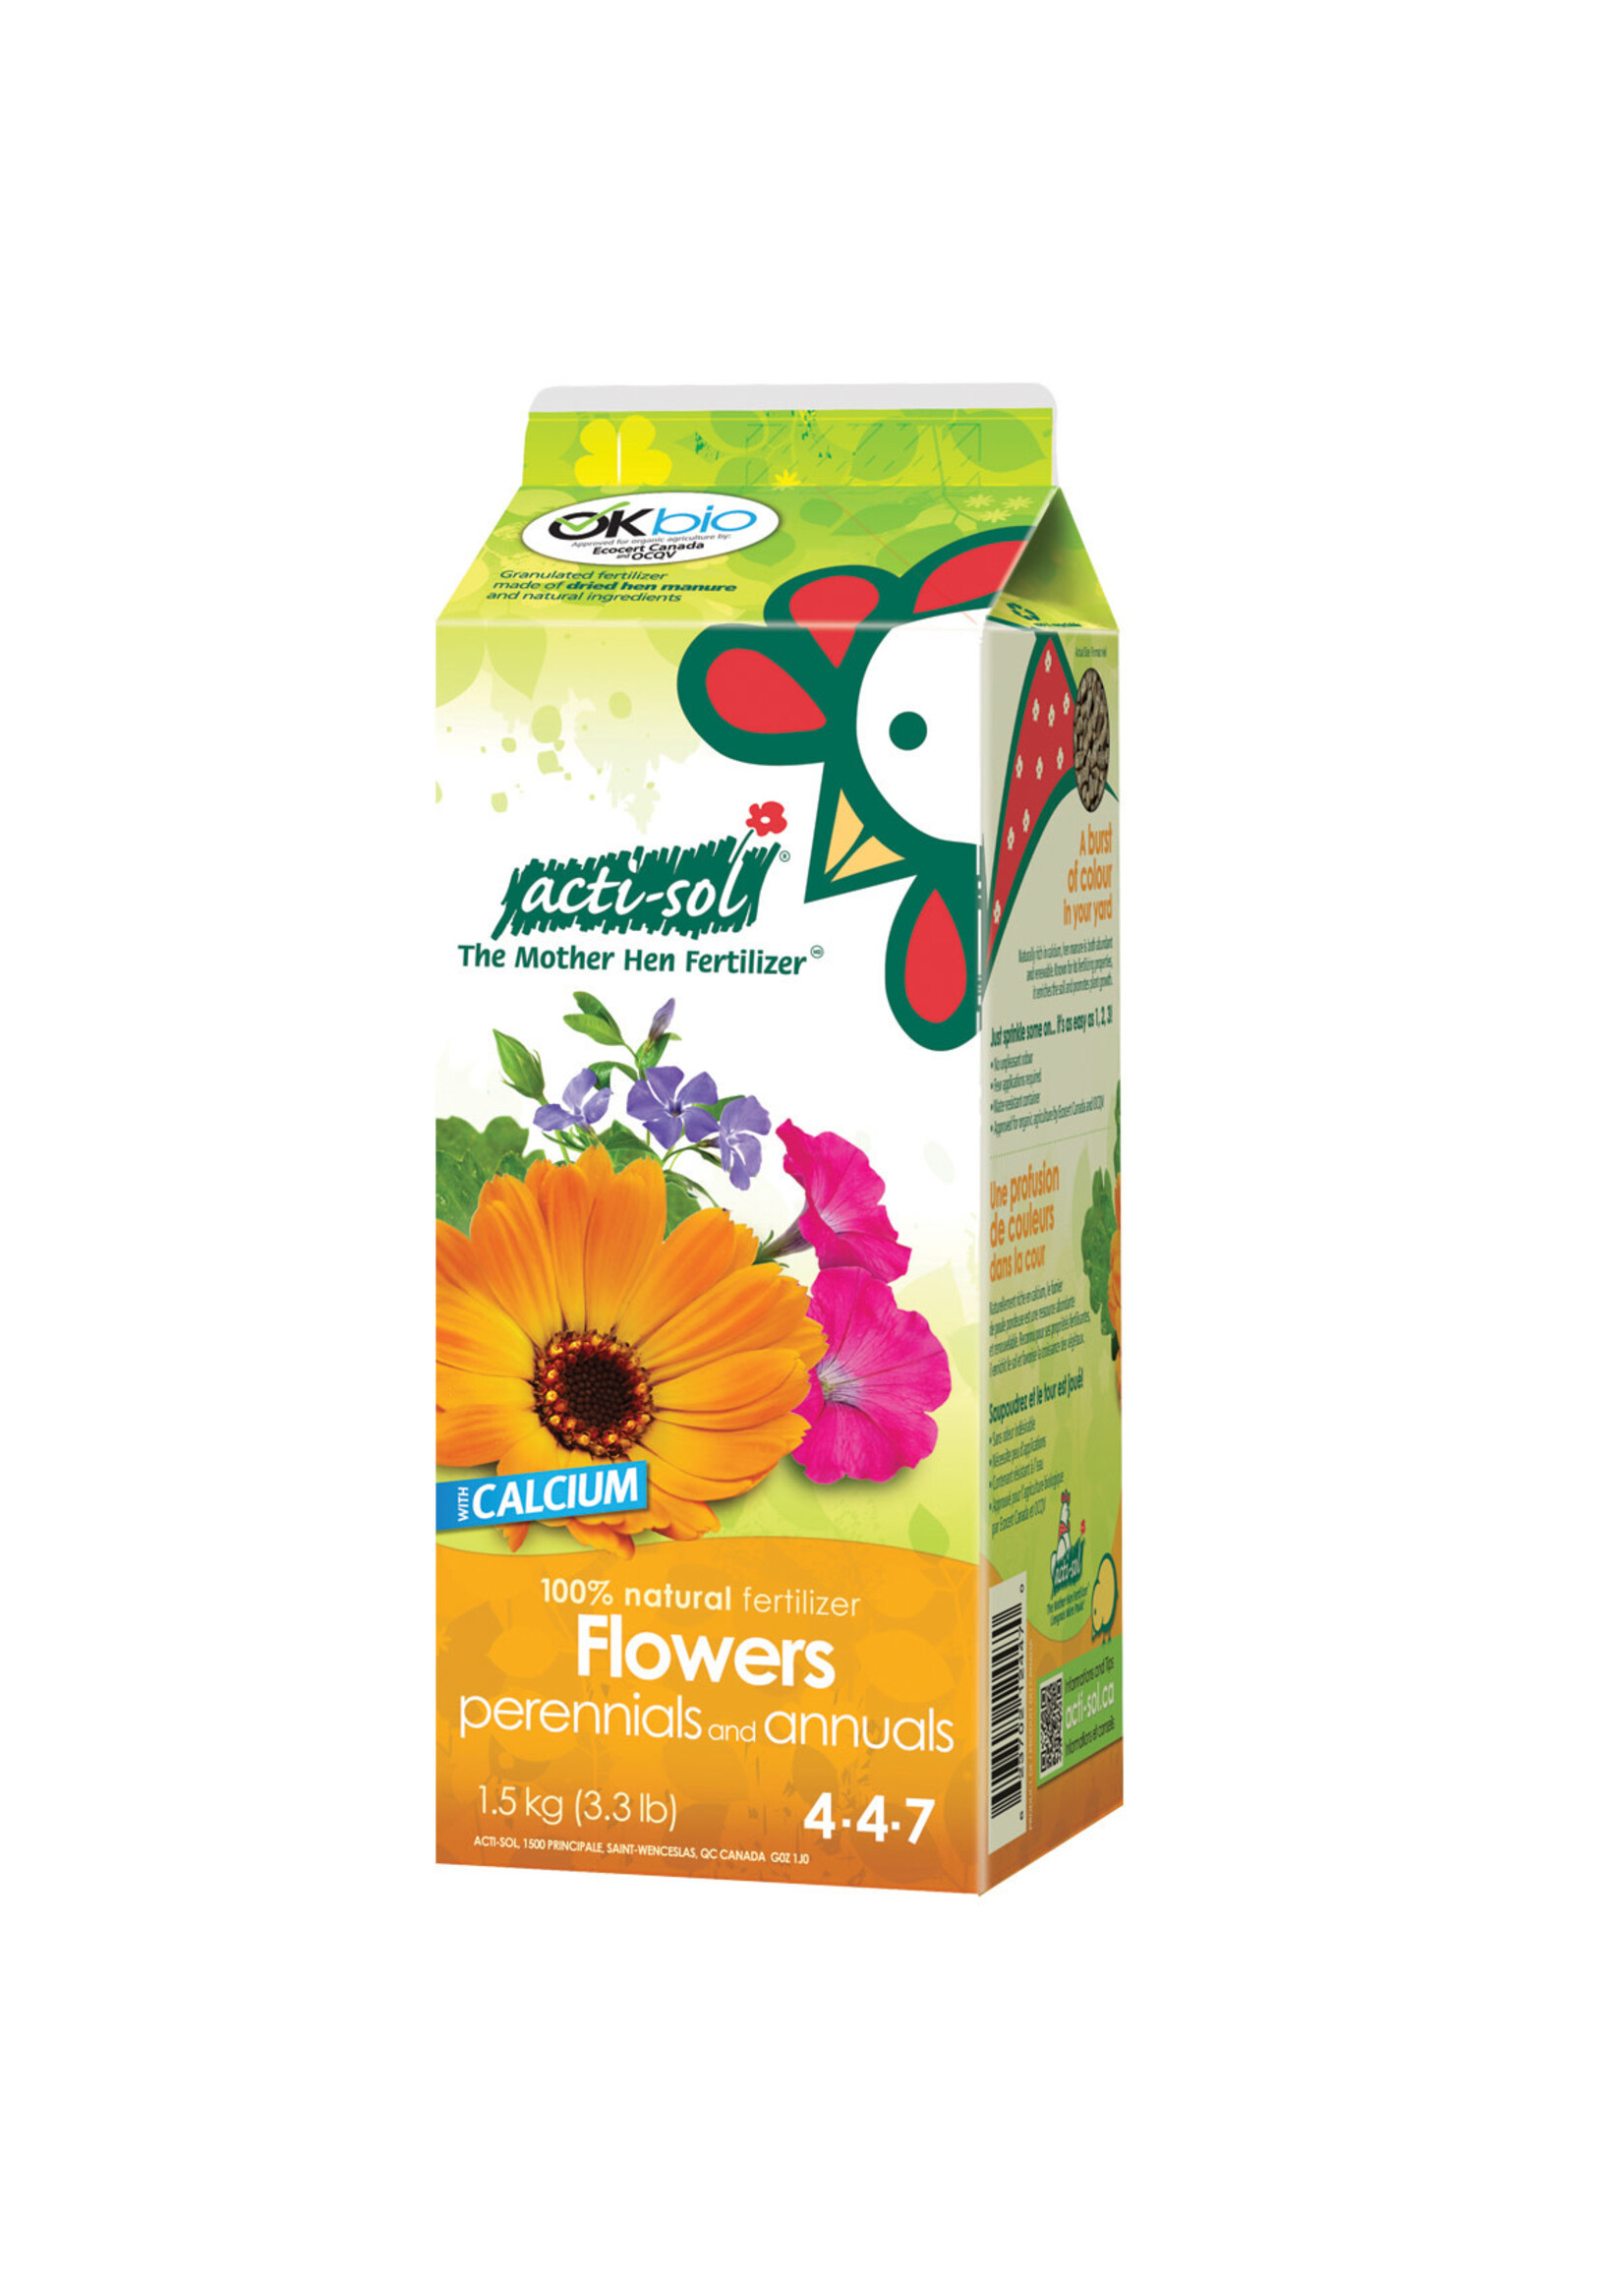 Acti-sol Acti-Sol Perennials and Annual Flowers 4-4-7 1.5kg